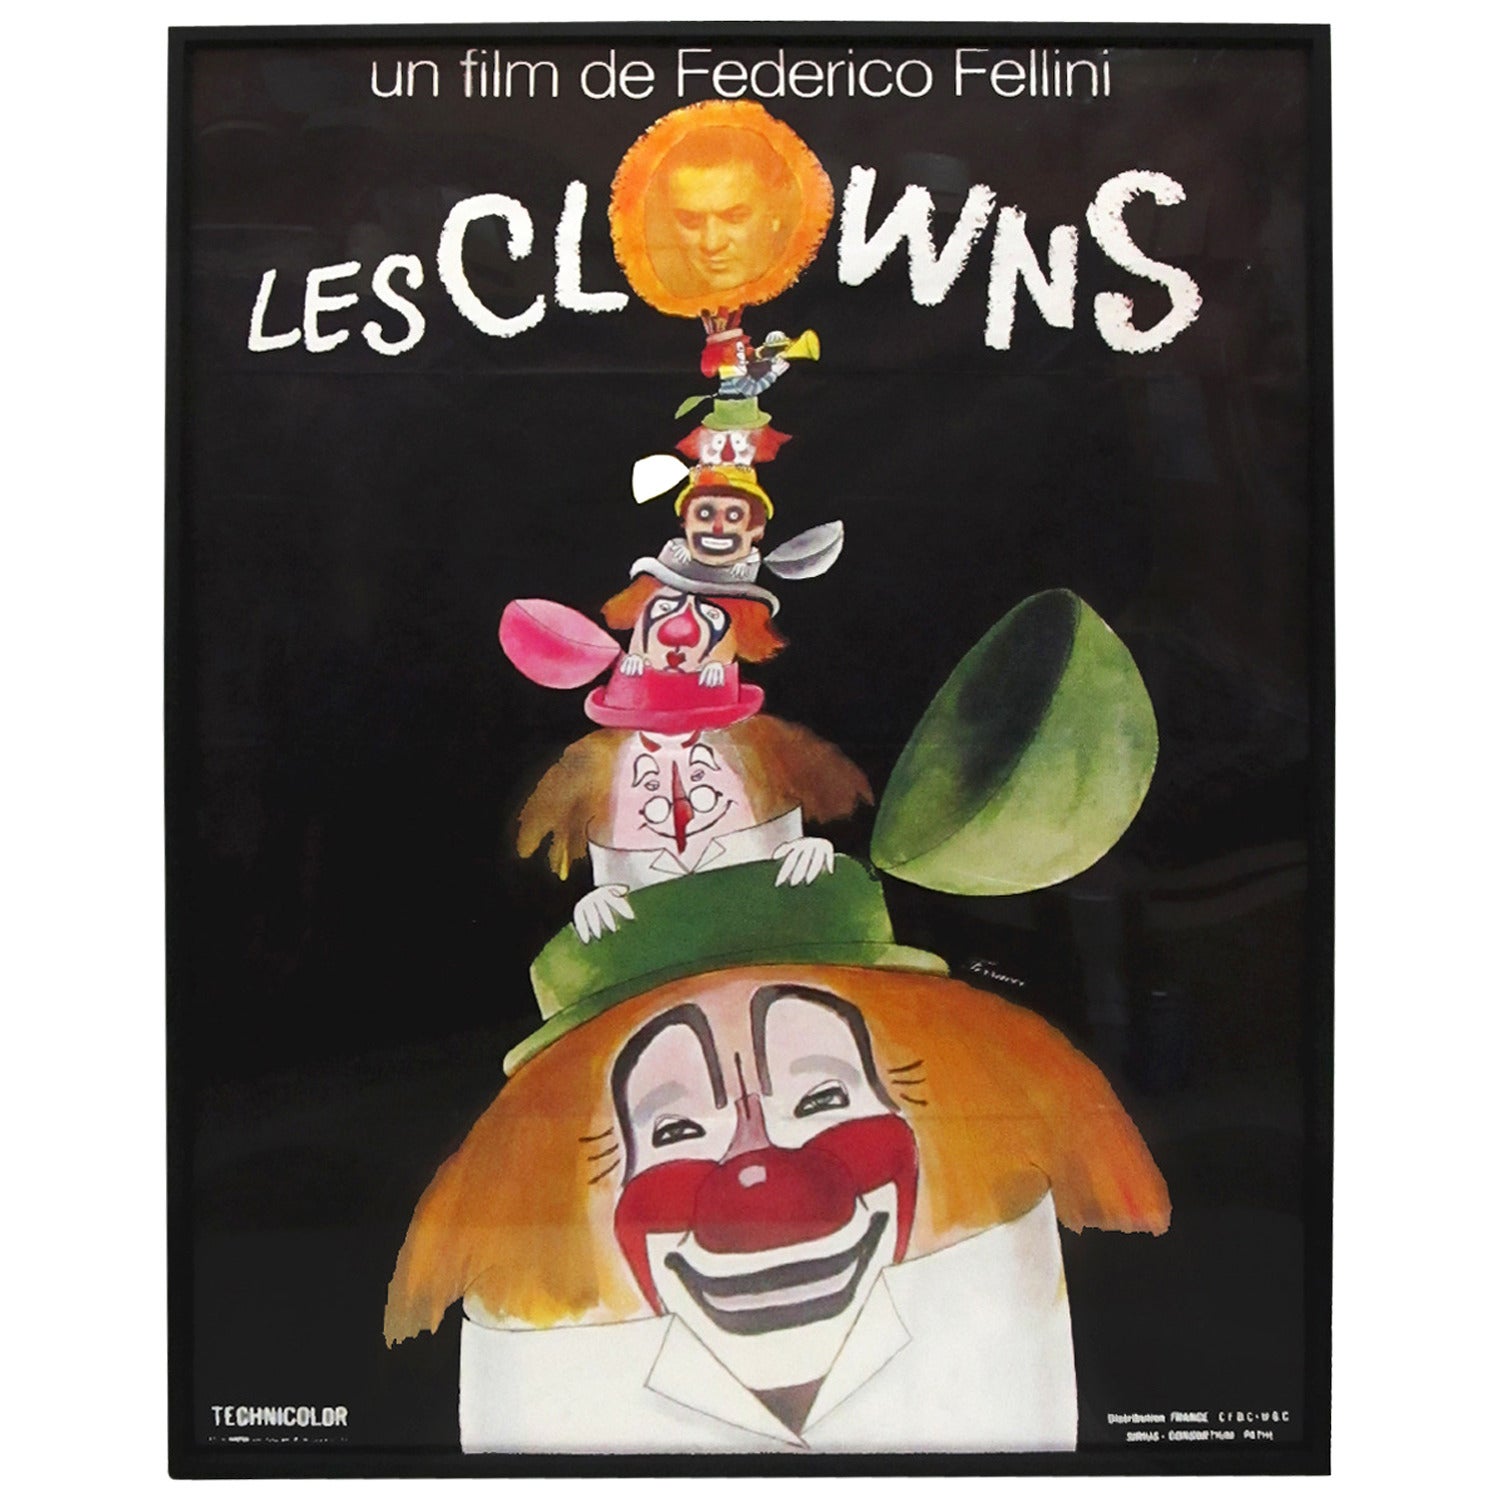 Original Poster by Ferracci Featuring "Les Clowns" Movie by Frederico Fellini